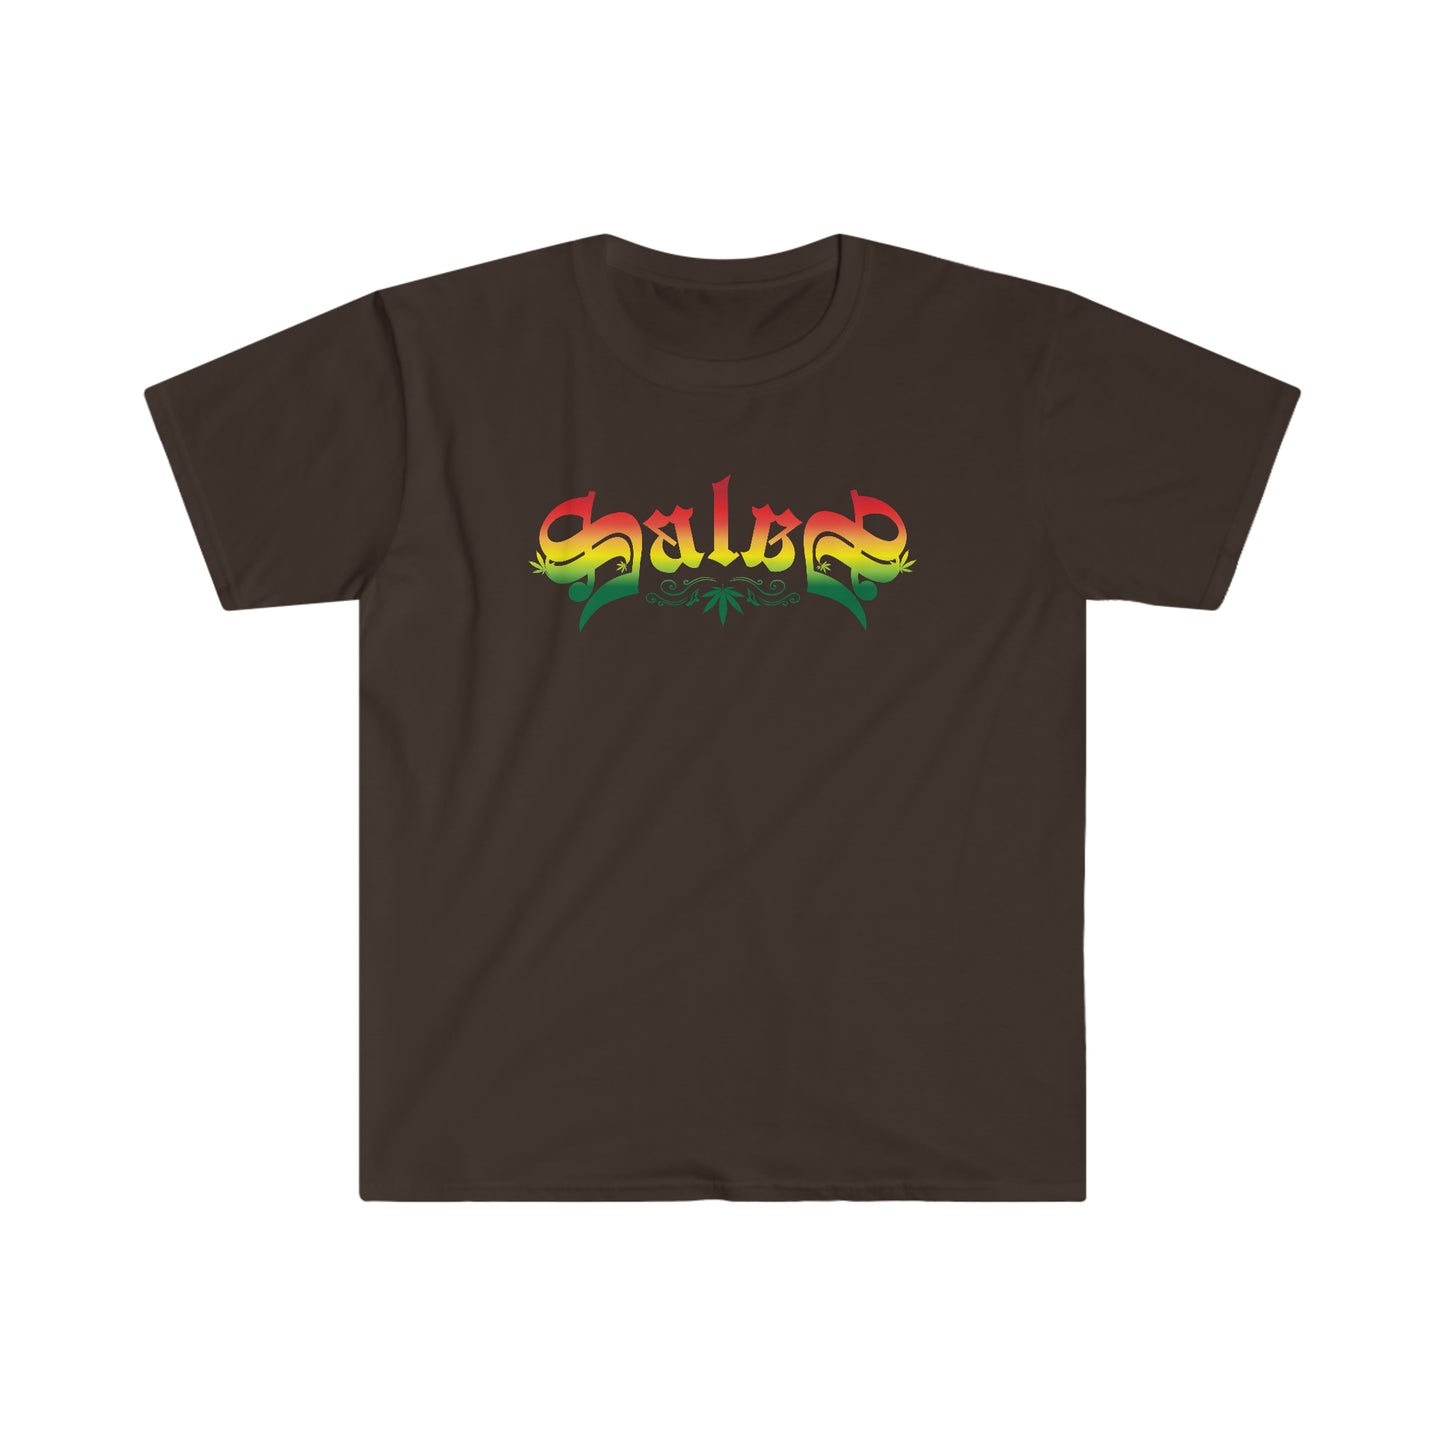 Salas Rasta Colors - Unisex Softstyle T-Shirt